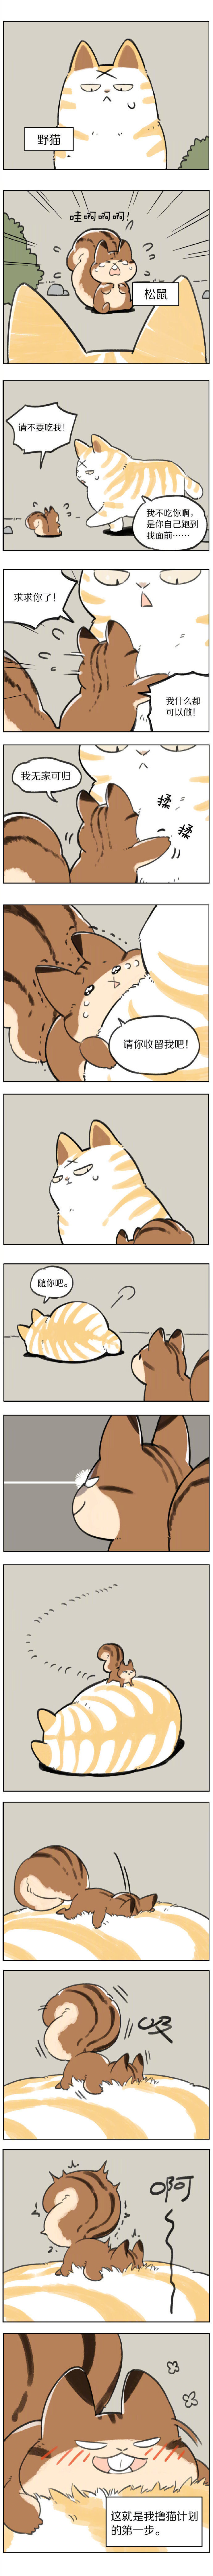 [cp]松鼠x野猫，最后那个满足的表情太可爱了！
#二次元条漫##漫画# @麻尾 ​​​​[/cp]